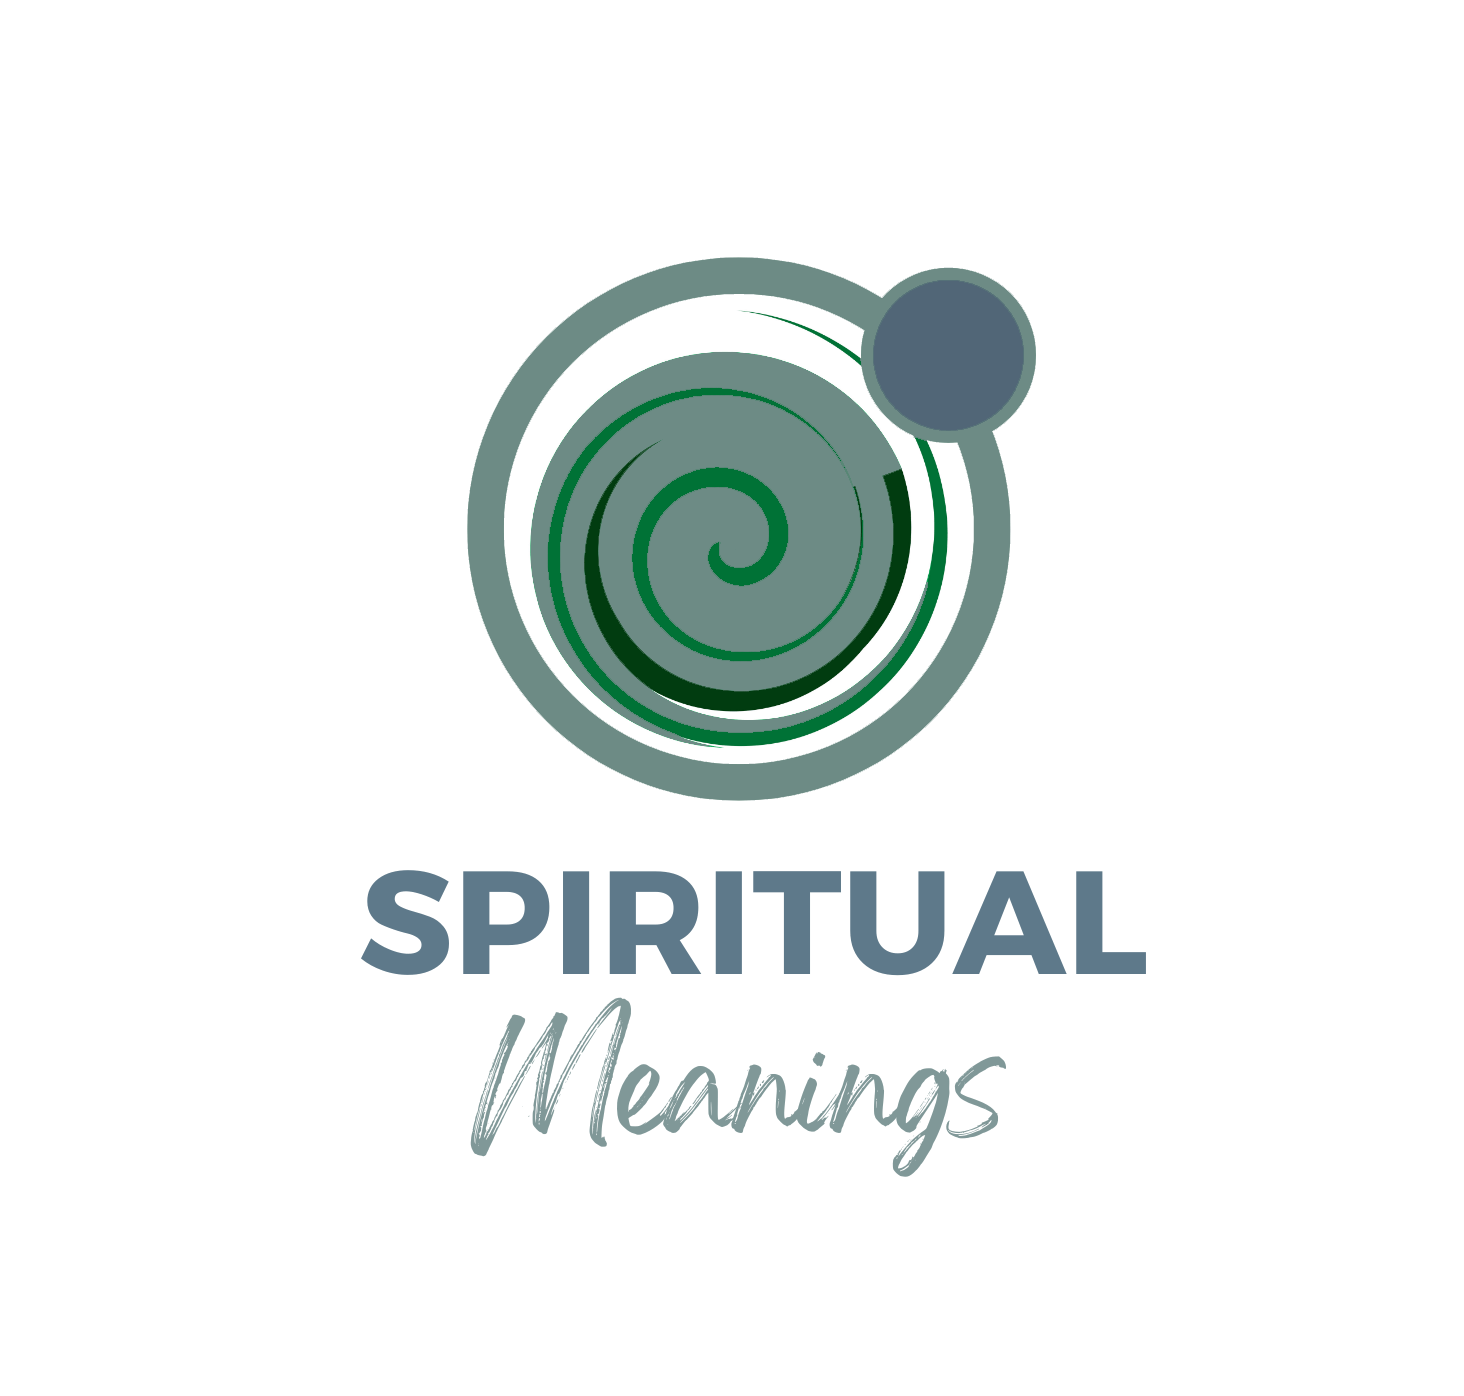 SpiralSpiritual.com